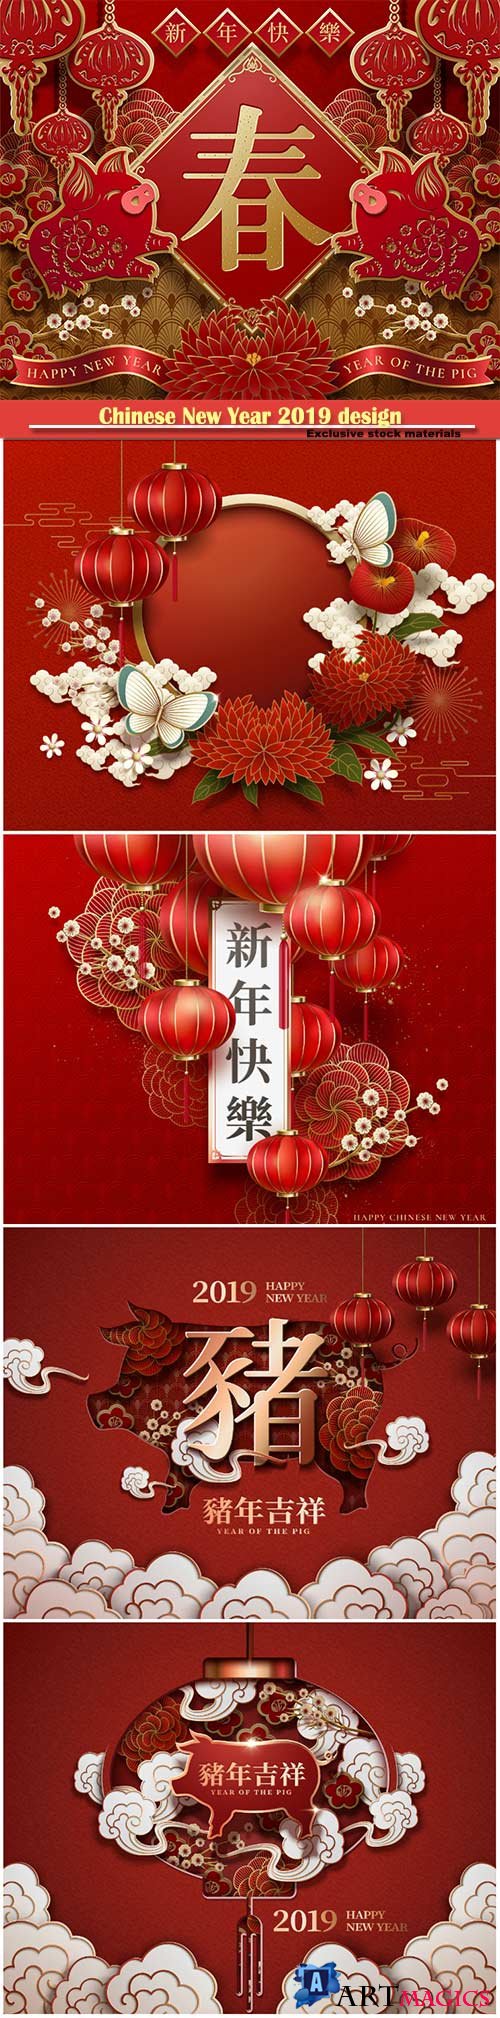 Chinese New Year 2019 festive design vector illustration